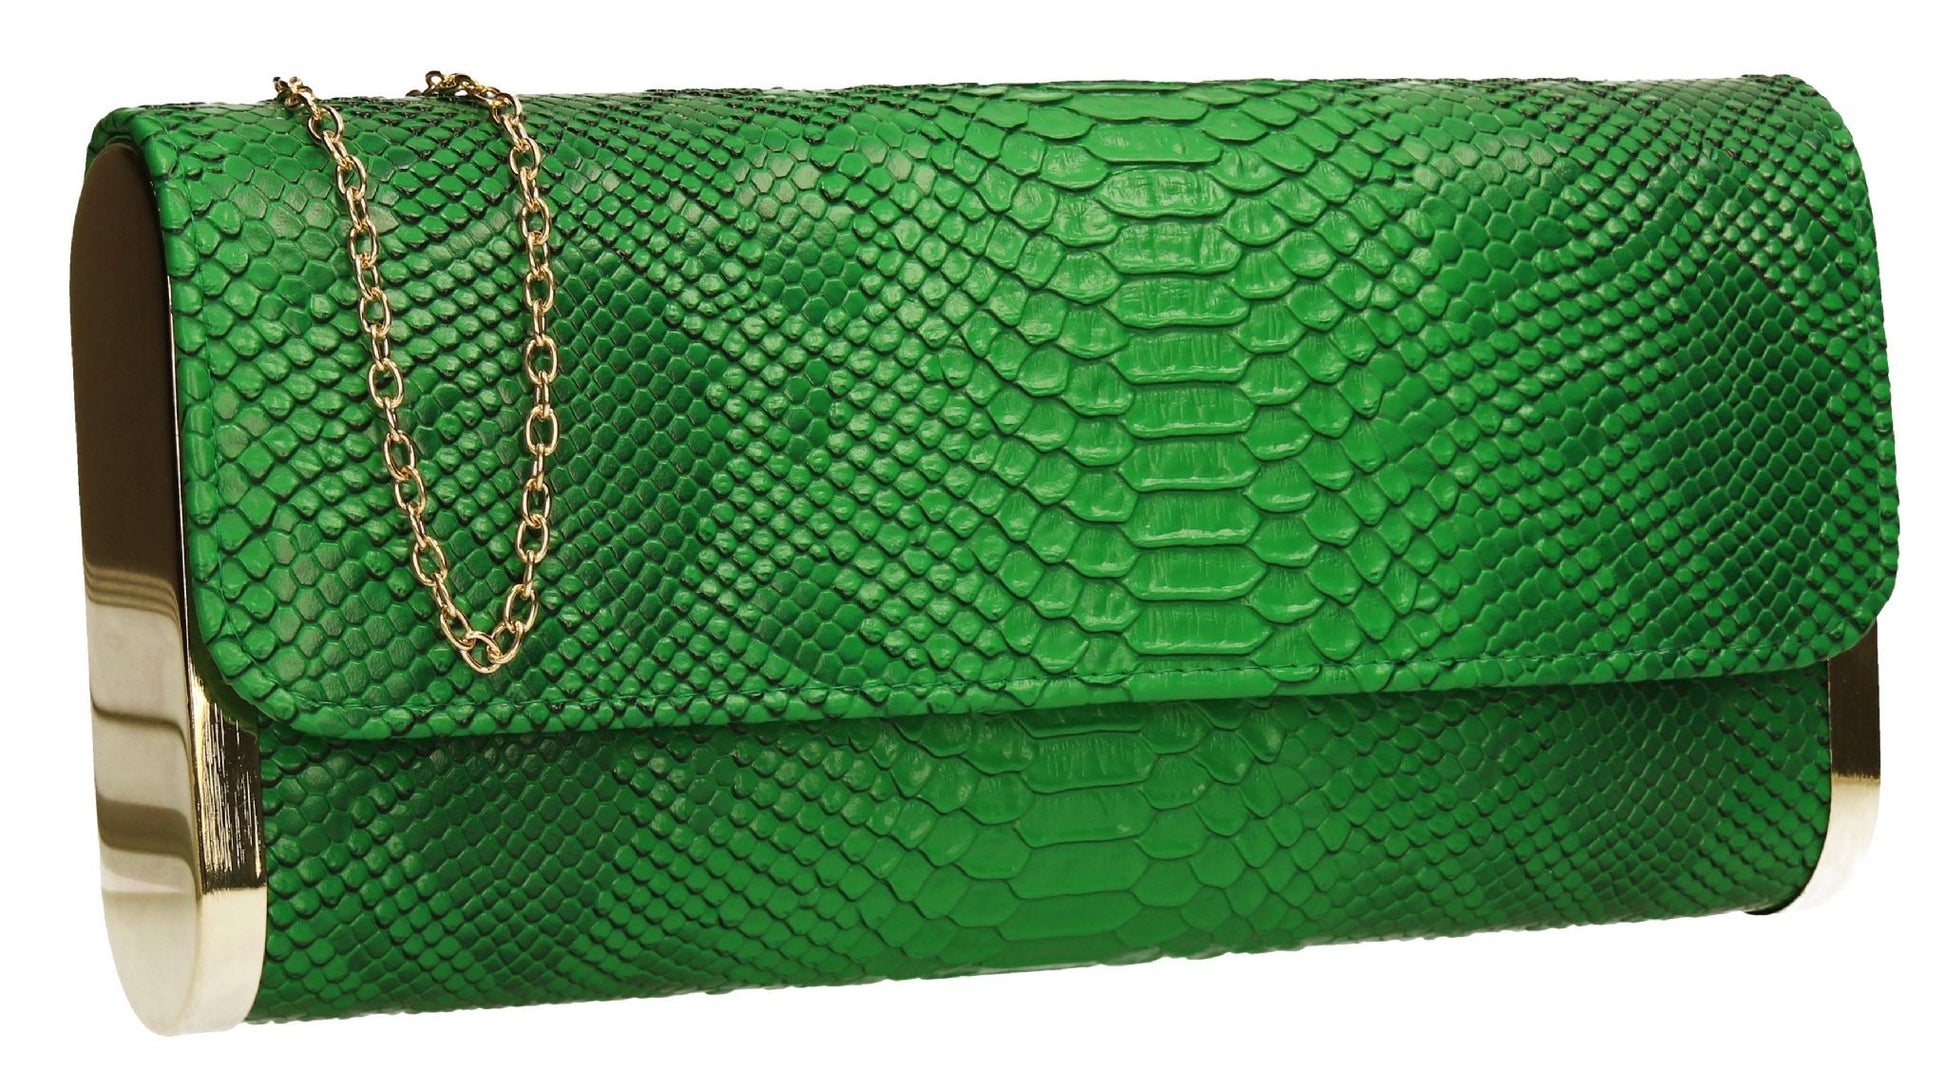 SWANKYSWANS Miranda Clutch Bag Green Cute Cheap Clutch Bag For Weddings School and Work